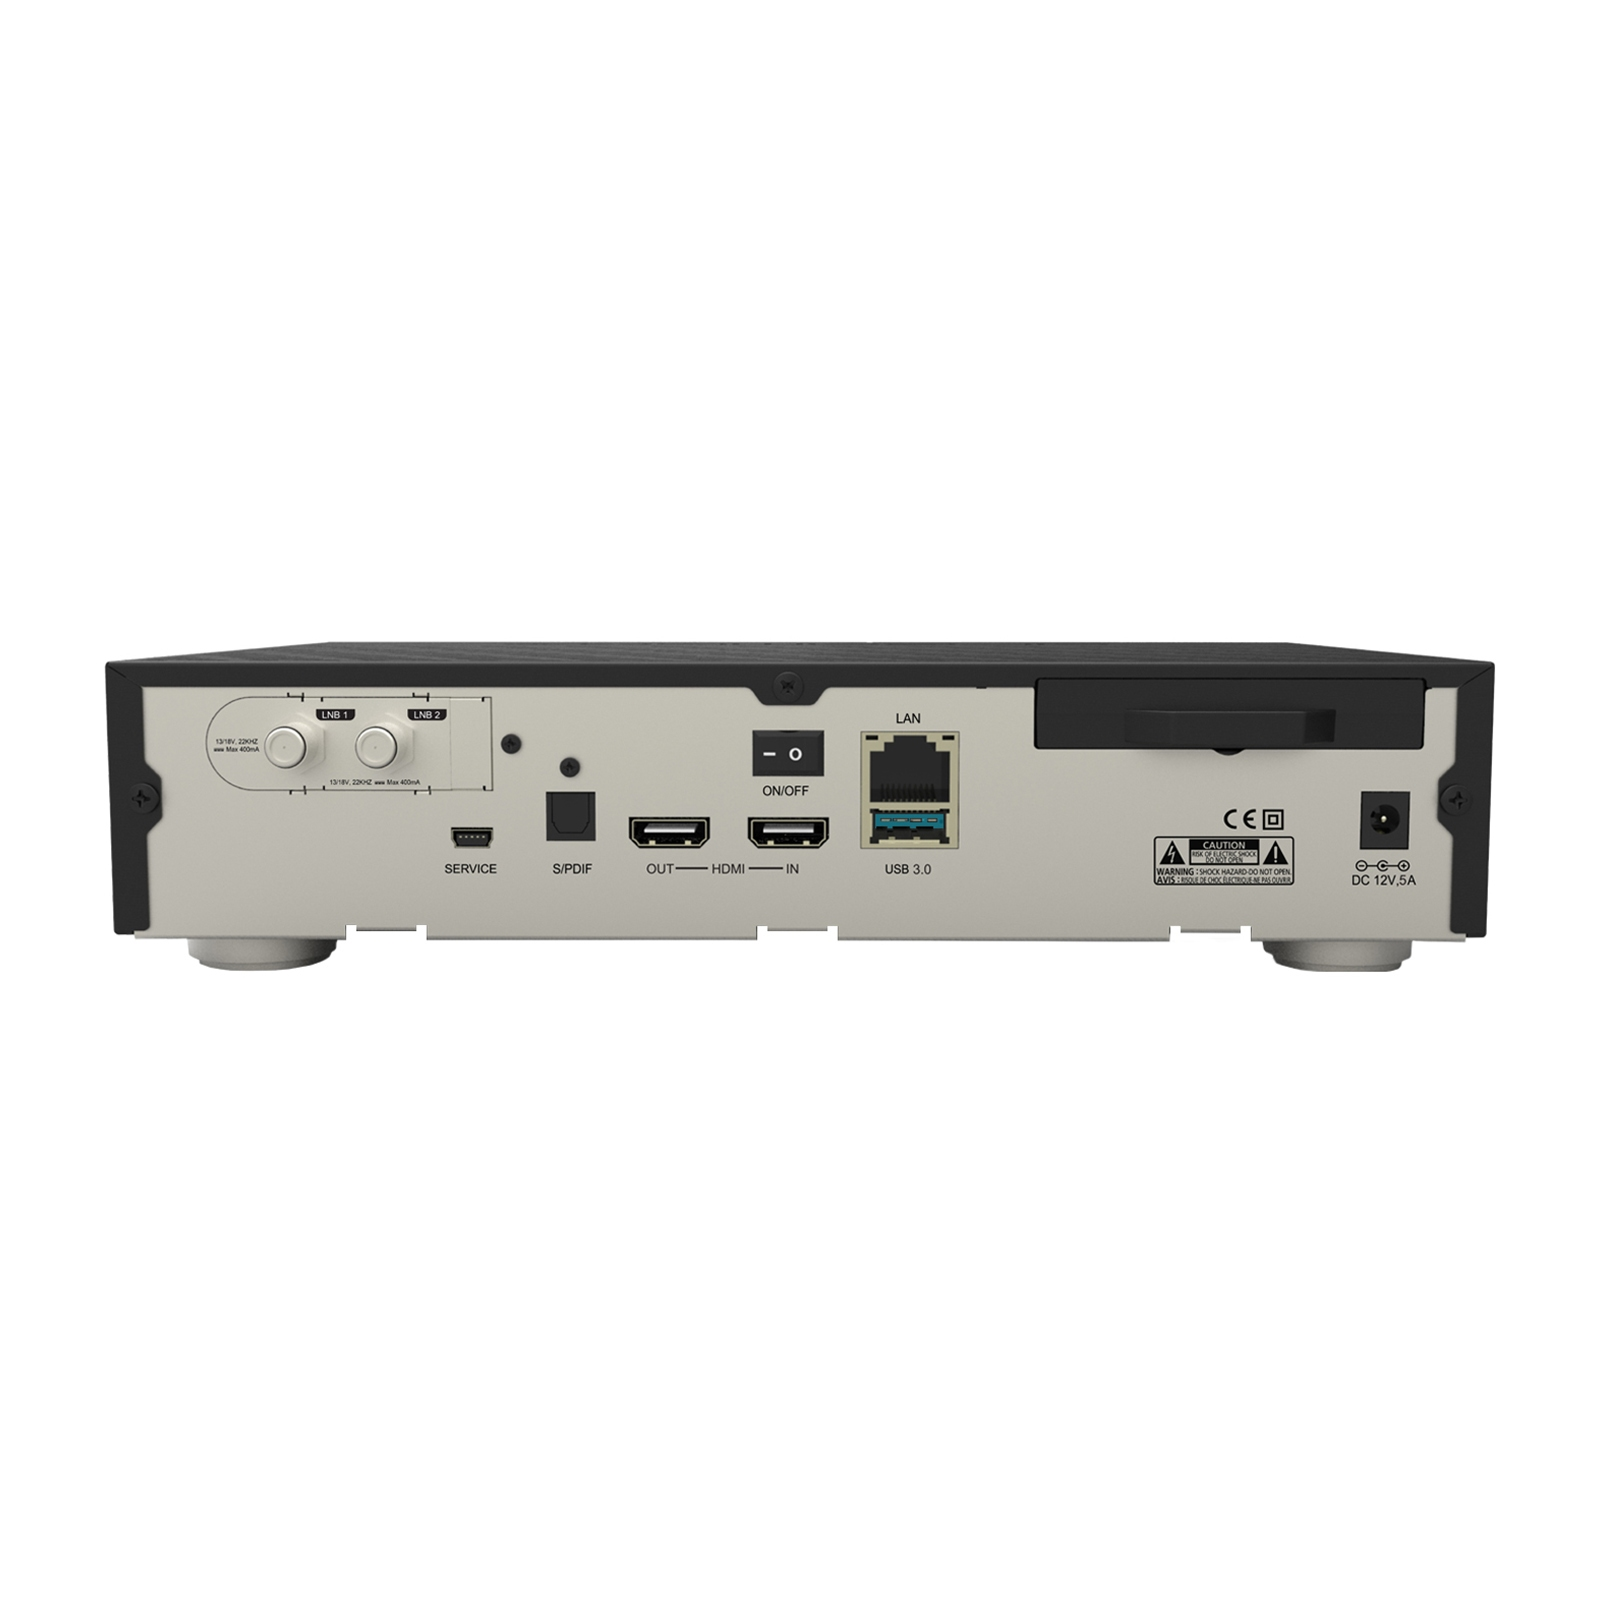 DREAM MULTIMEDIA Sat-Receiver Tuner, 1TB Schwarz) RC20 DM900 MS 1xDVB-S2X Twin (PVR-Funktion